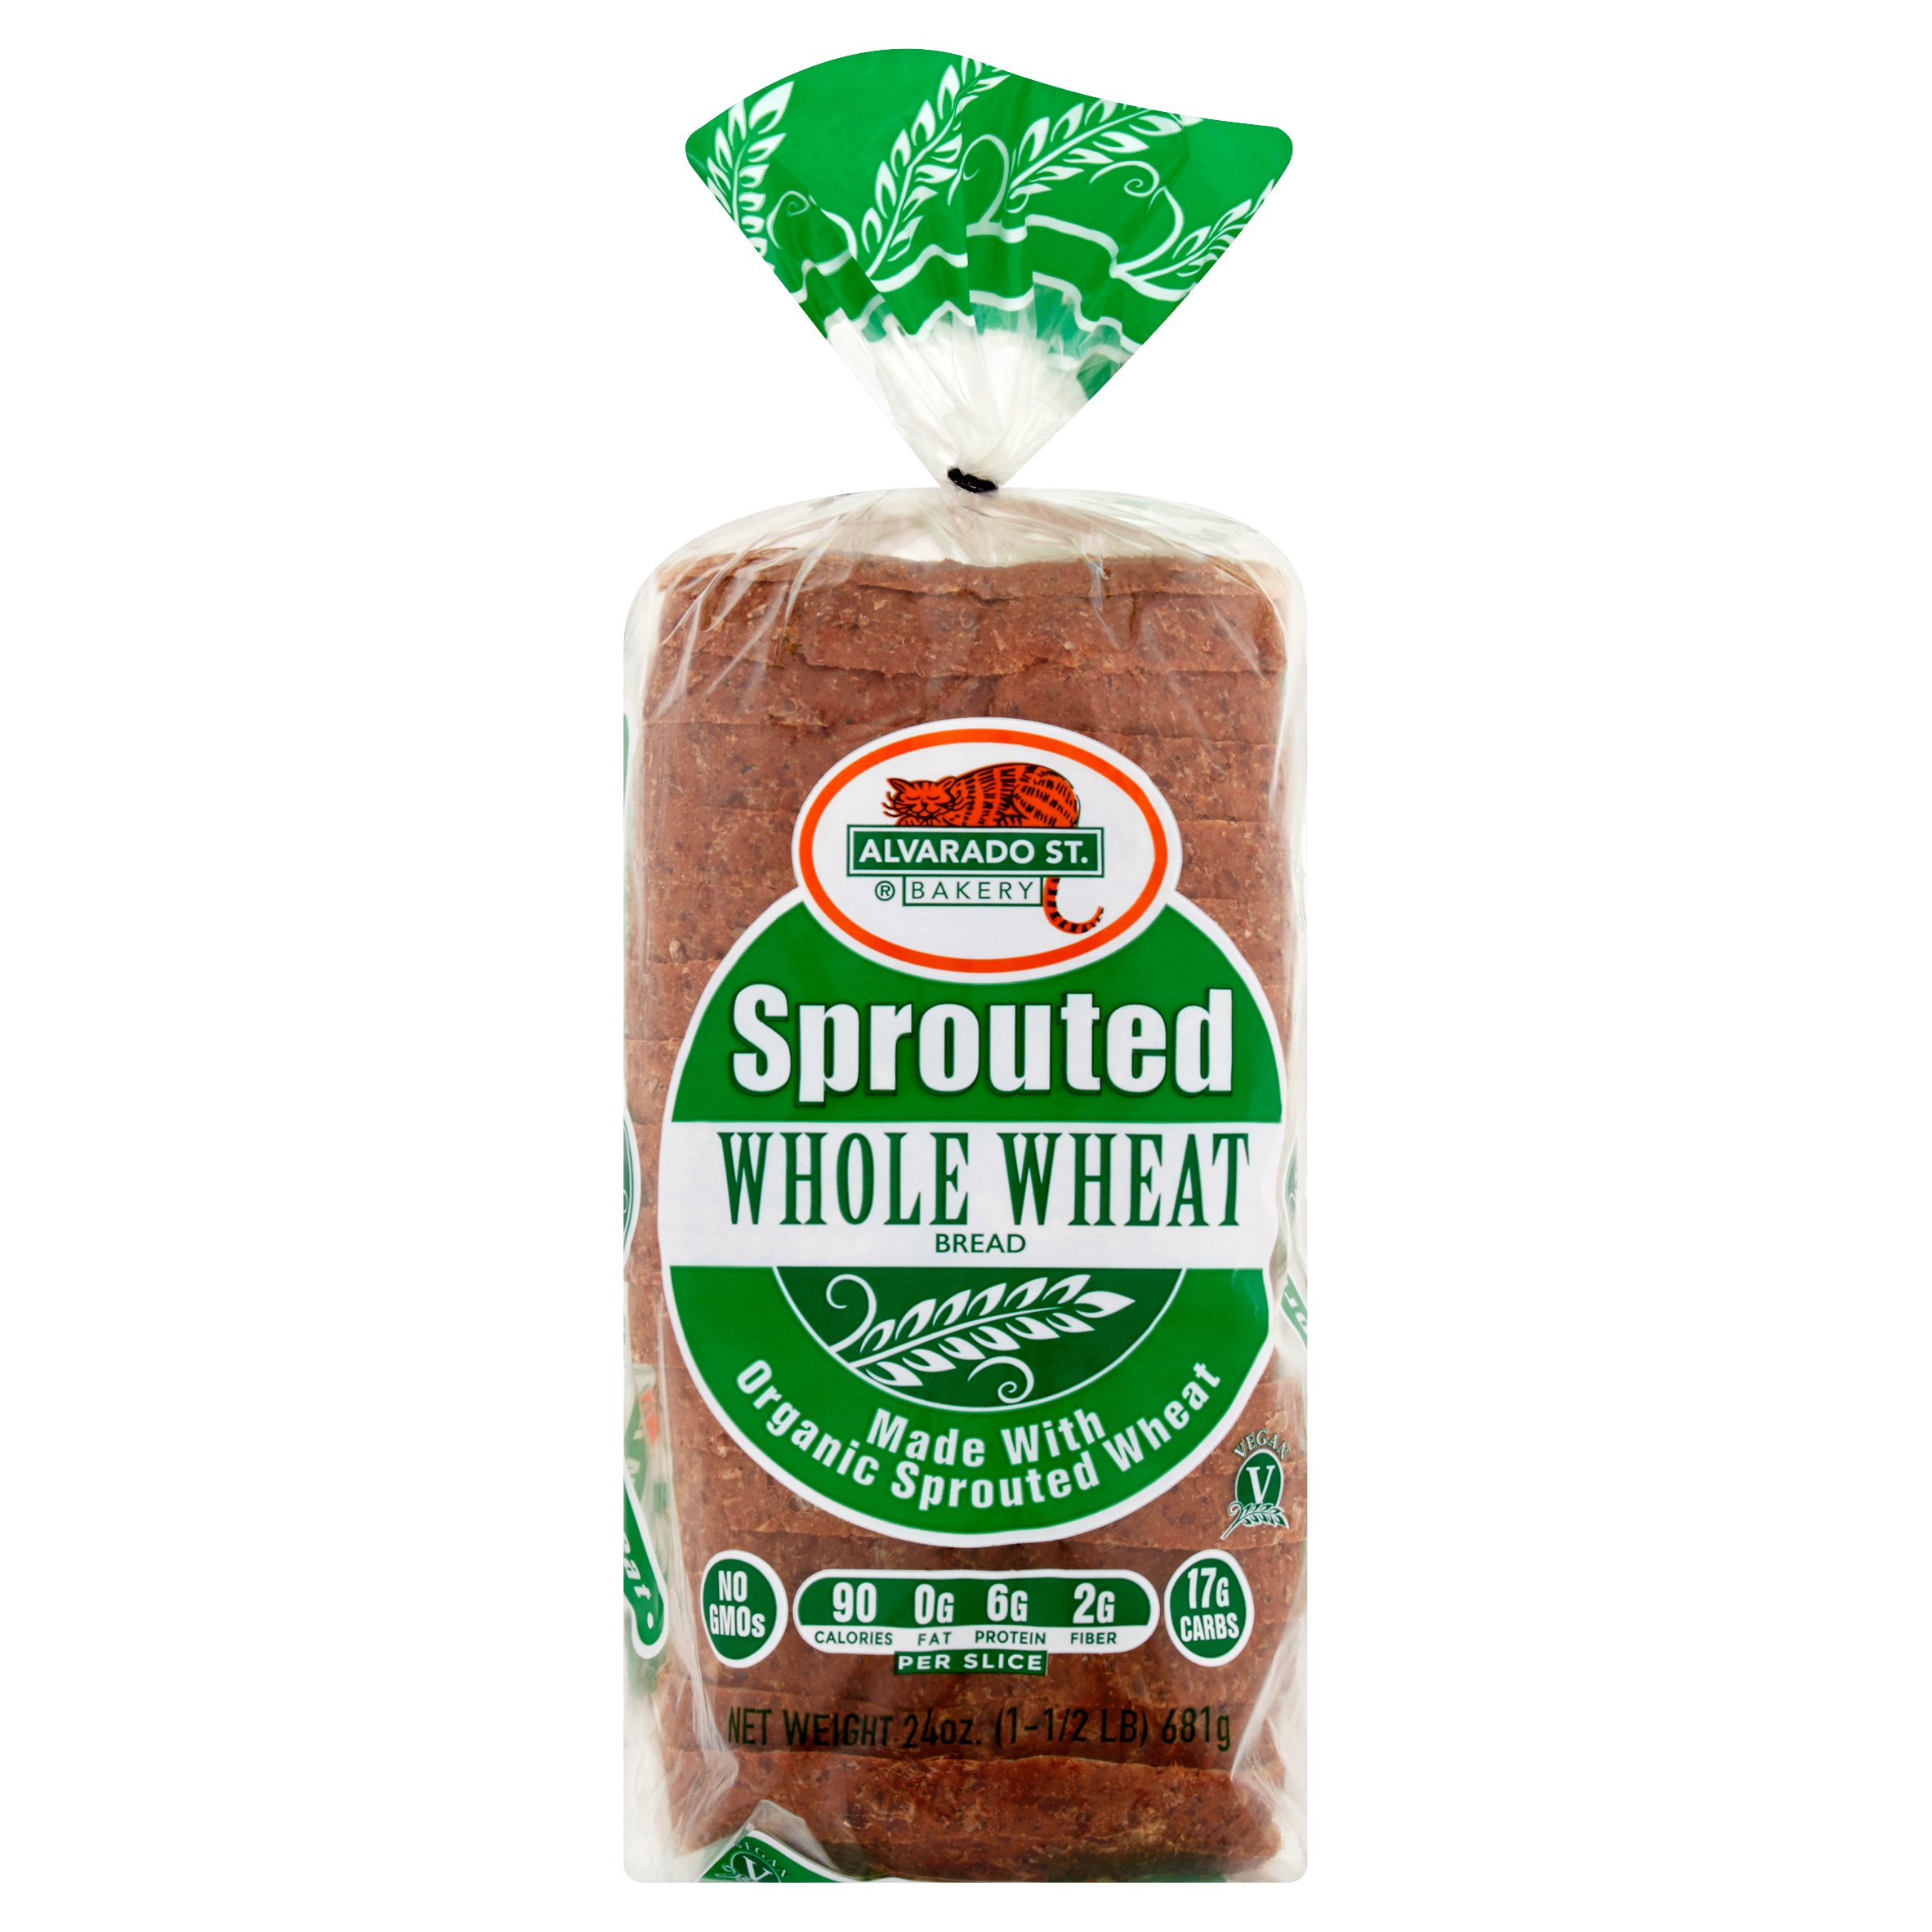 Alvarado Street Bakery Organic Sprouted Whole Wheat Bread, 24 Oz - image 1 of 2